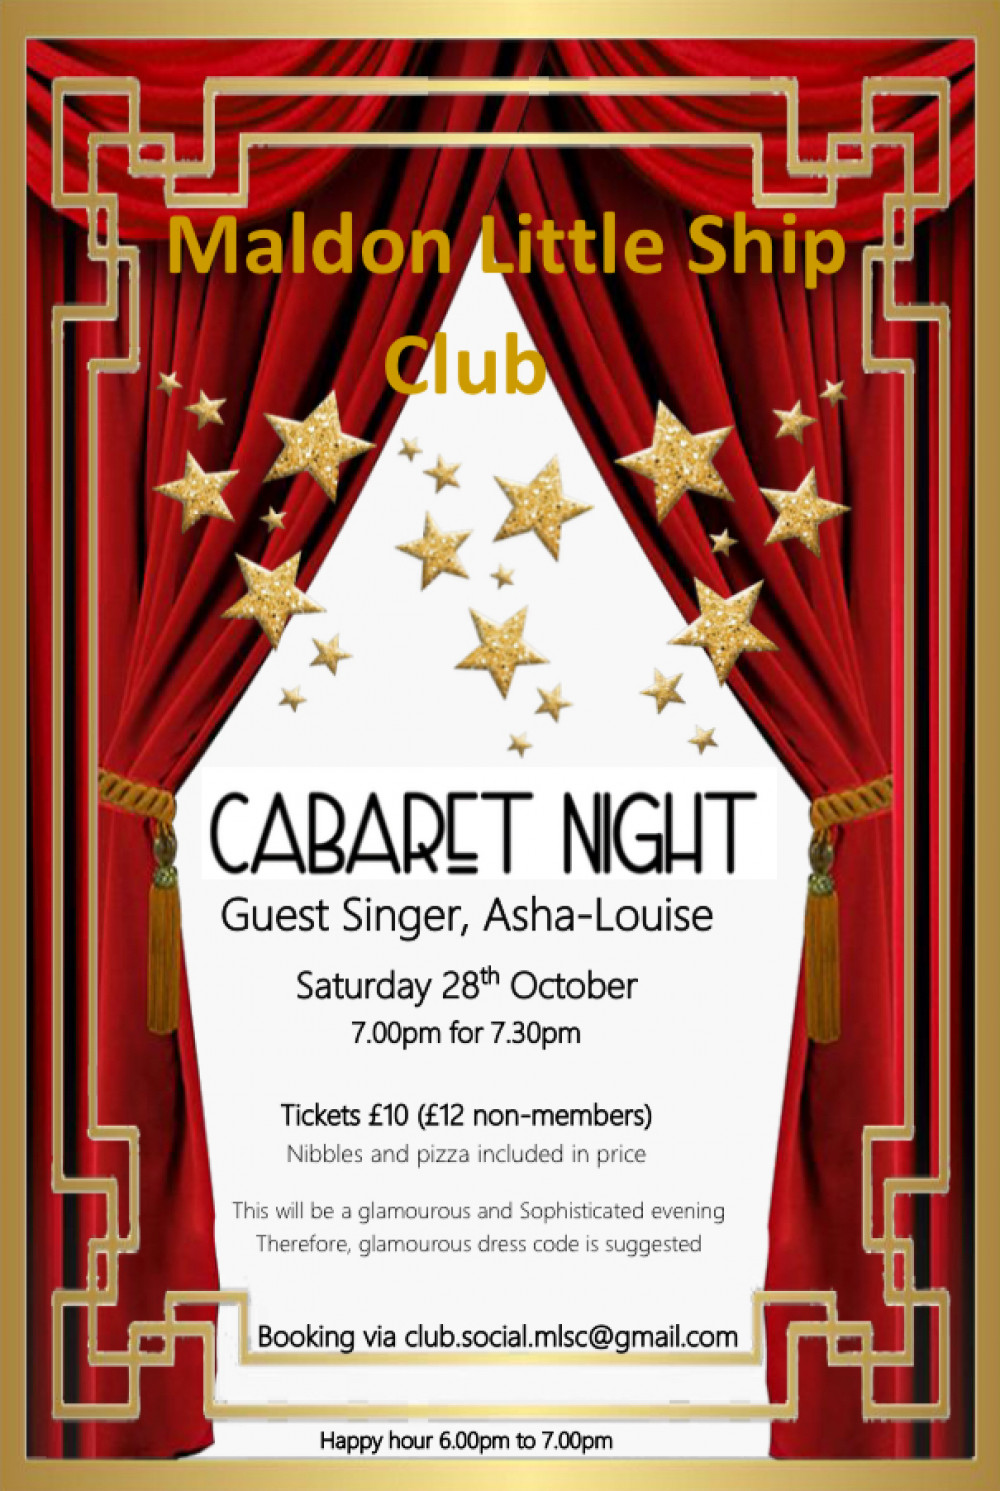 Cabaret Night at Maldon Little Ship Club. (Credit: Chris Bourne)